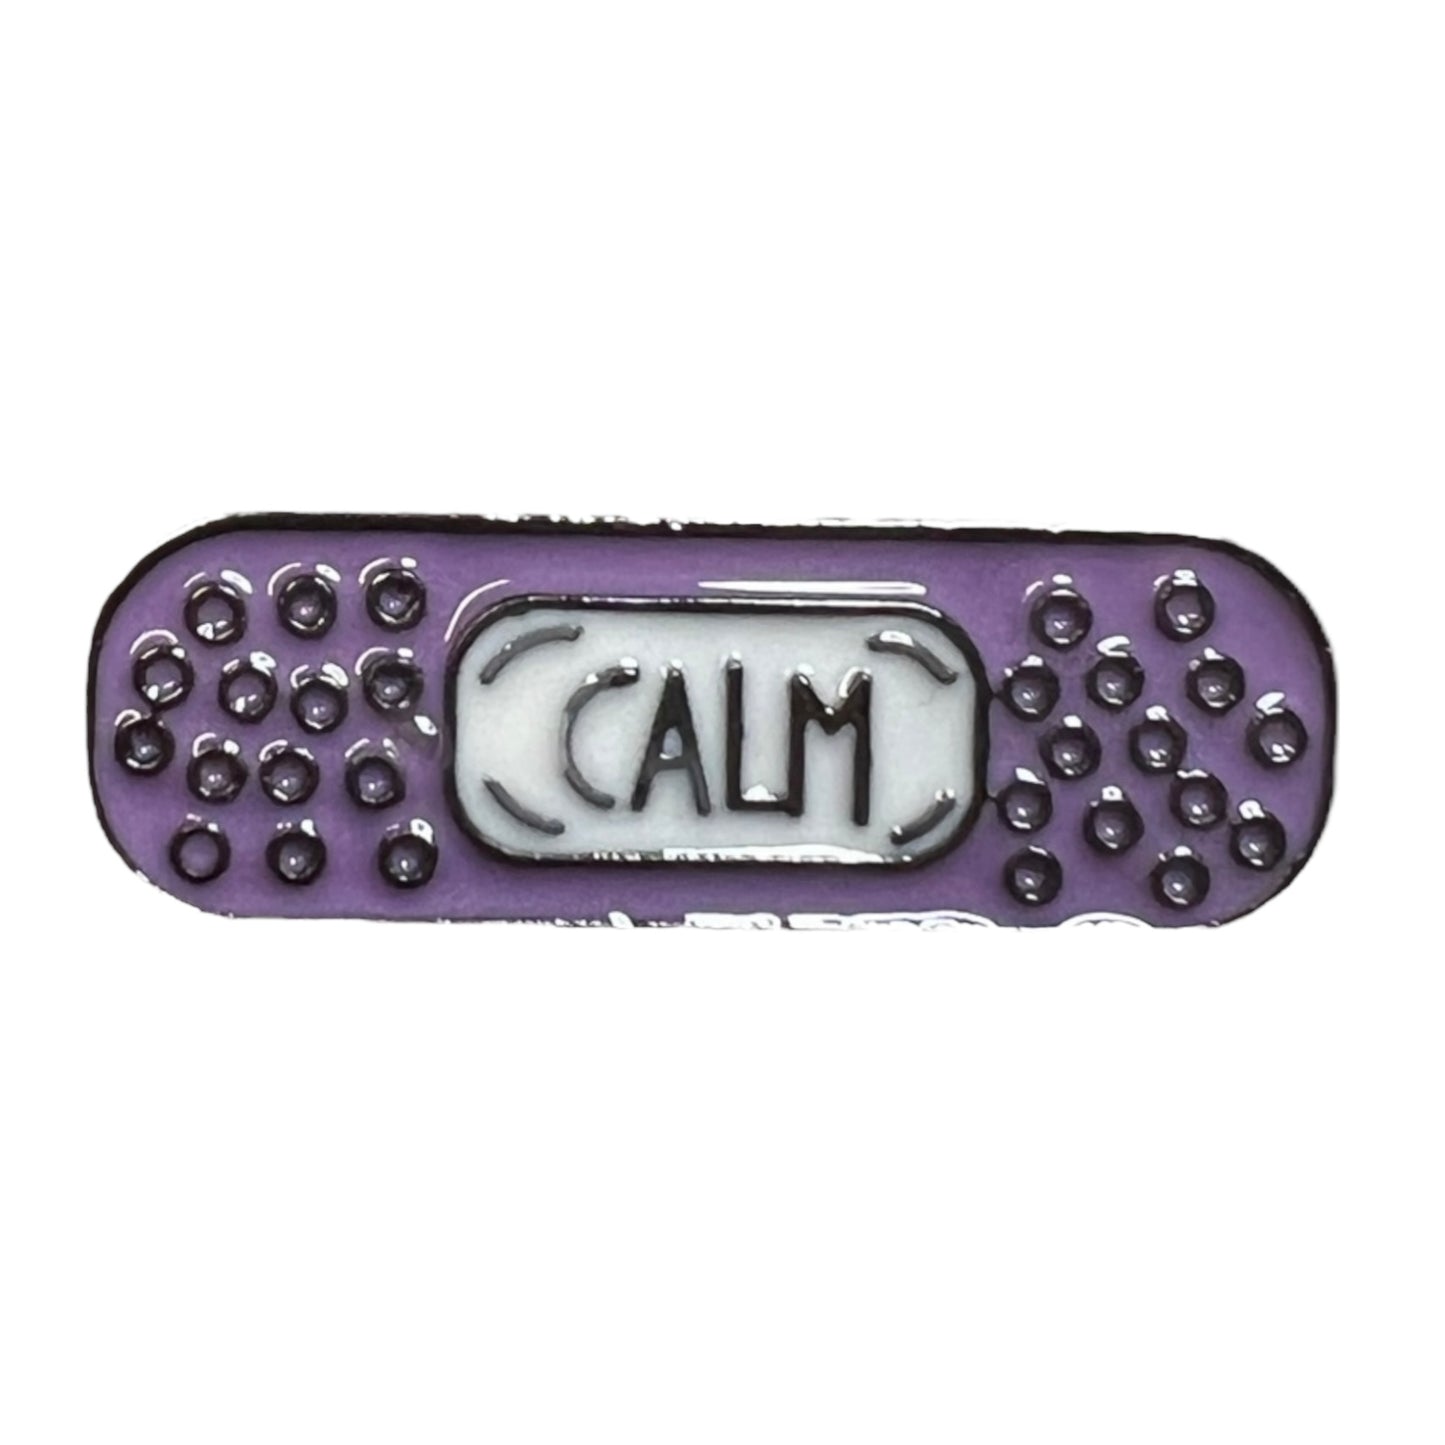 Pin — 'Calm'  SPIRIT SPARKPLUGS   